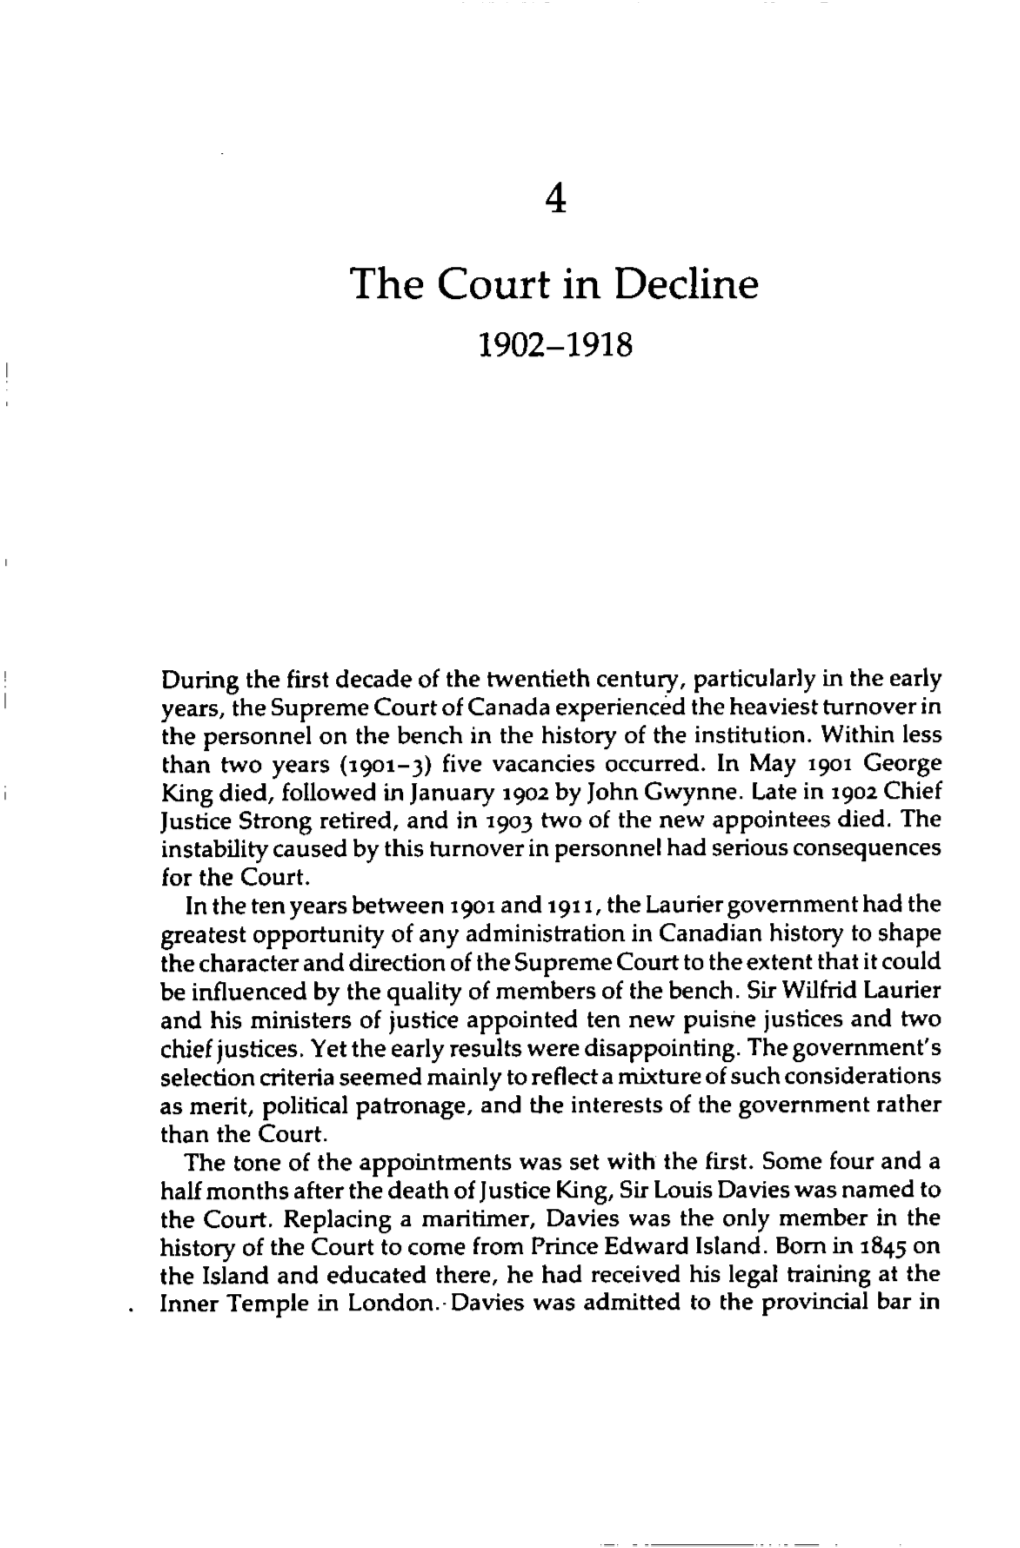 The Court in Decline 1902-1918